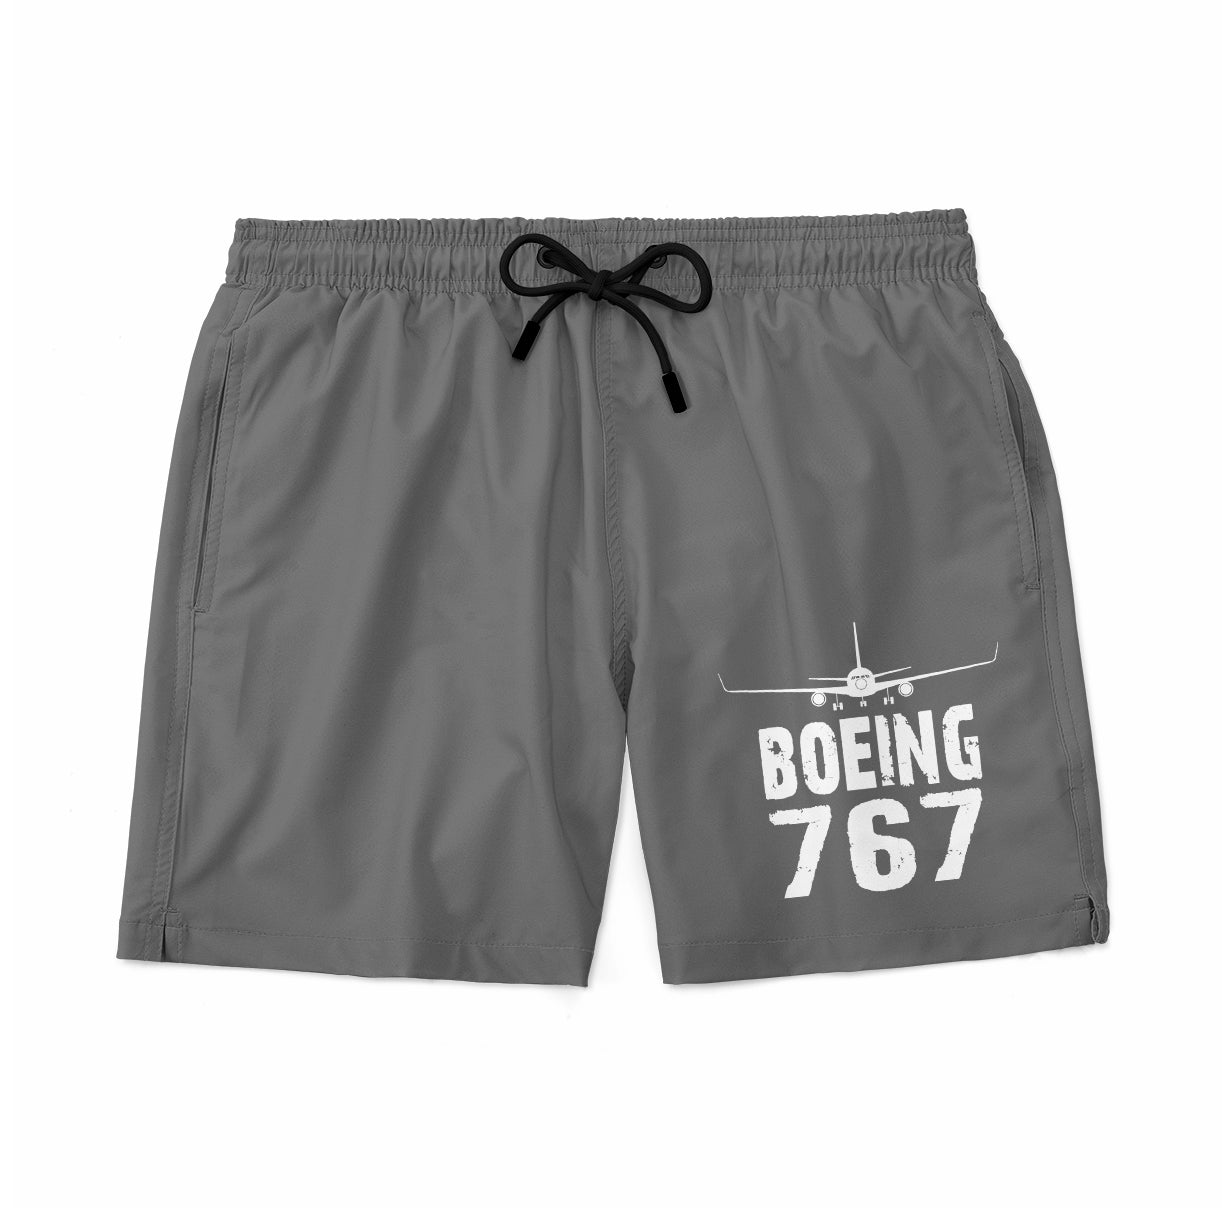 Boeing 767 & Plane Designed Swim Trunks & Shorts